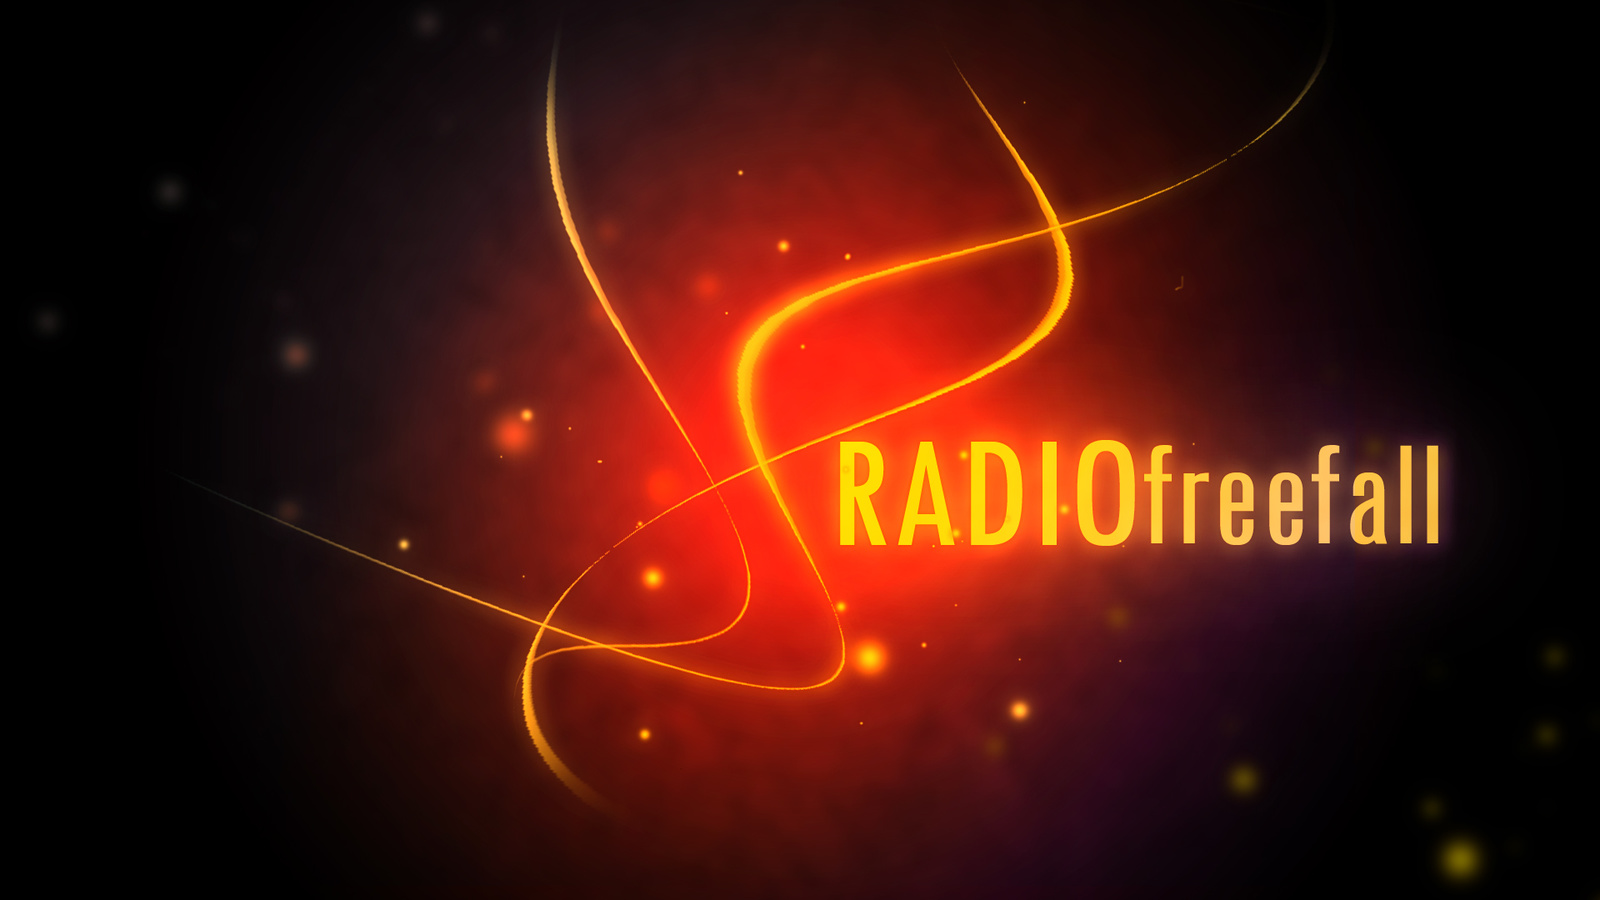 Radio freefall